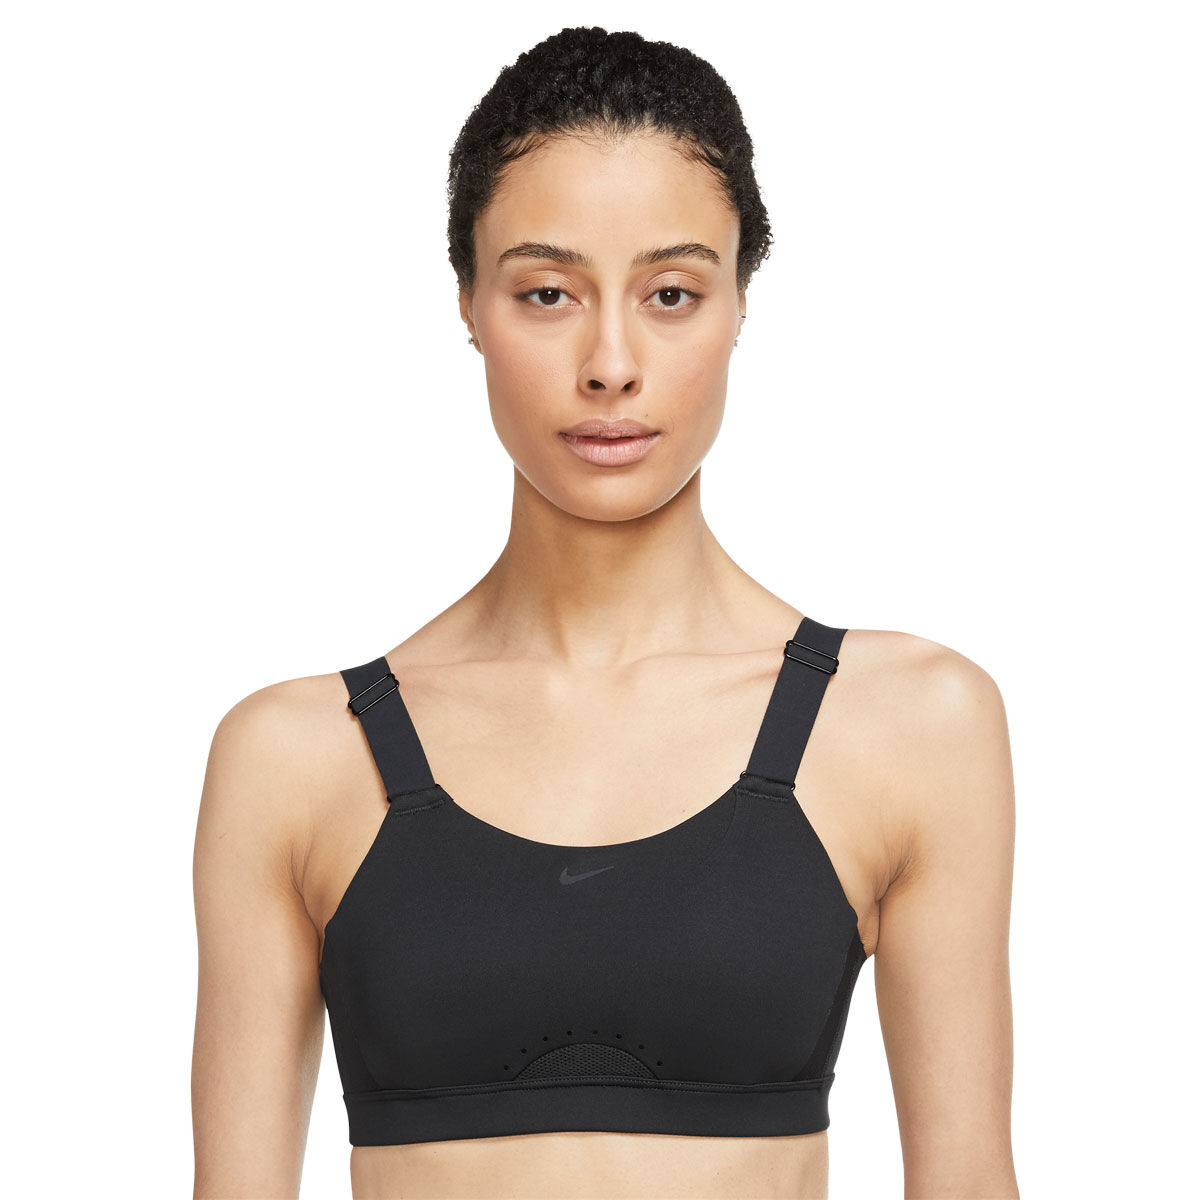 Nike Pro Womens Dri-FIT Mid-Rise Graphic Tights Black XS